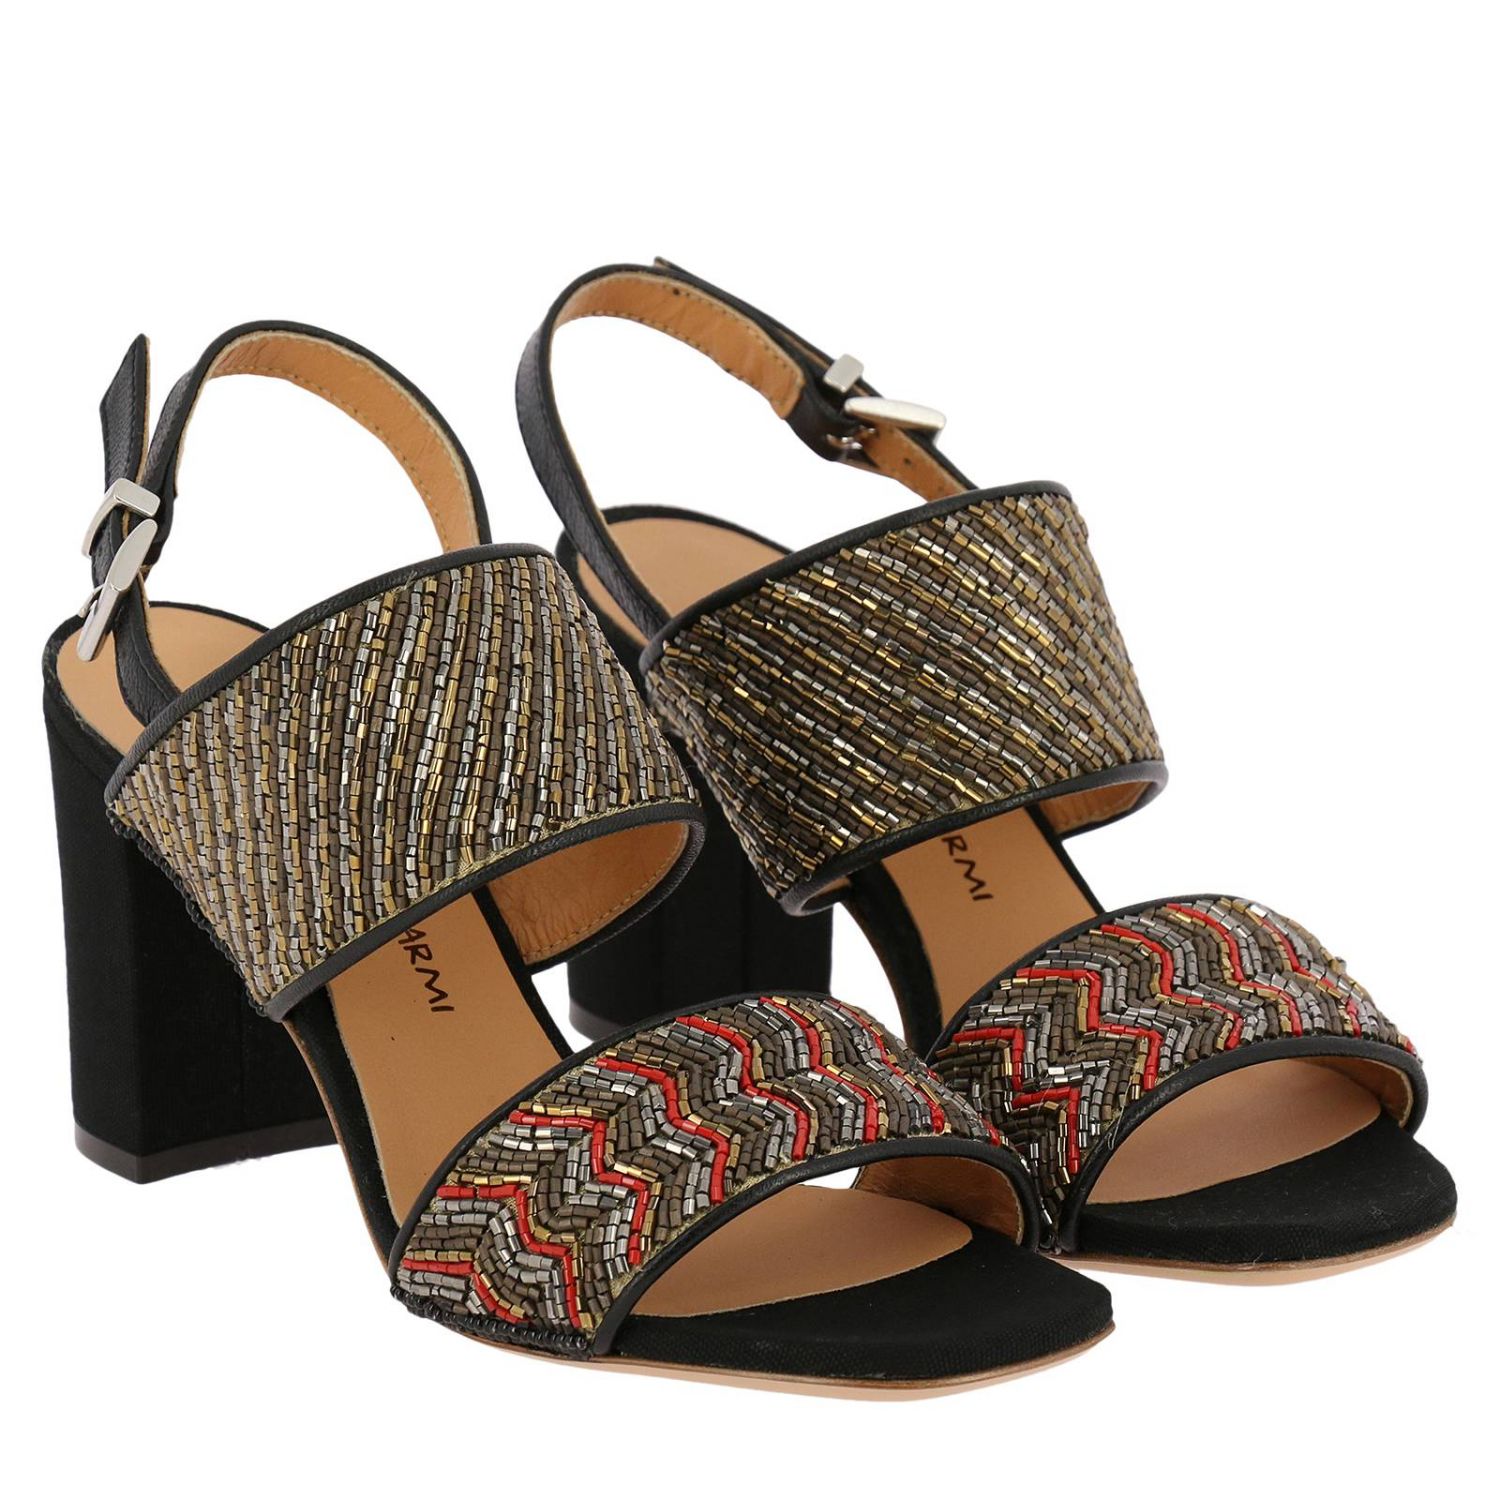 Maliparmi Outlet: Shoes women - Bronze | Heeled Sandals Maliparmi ...